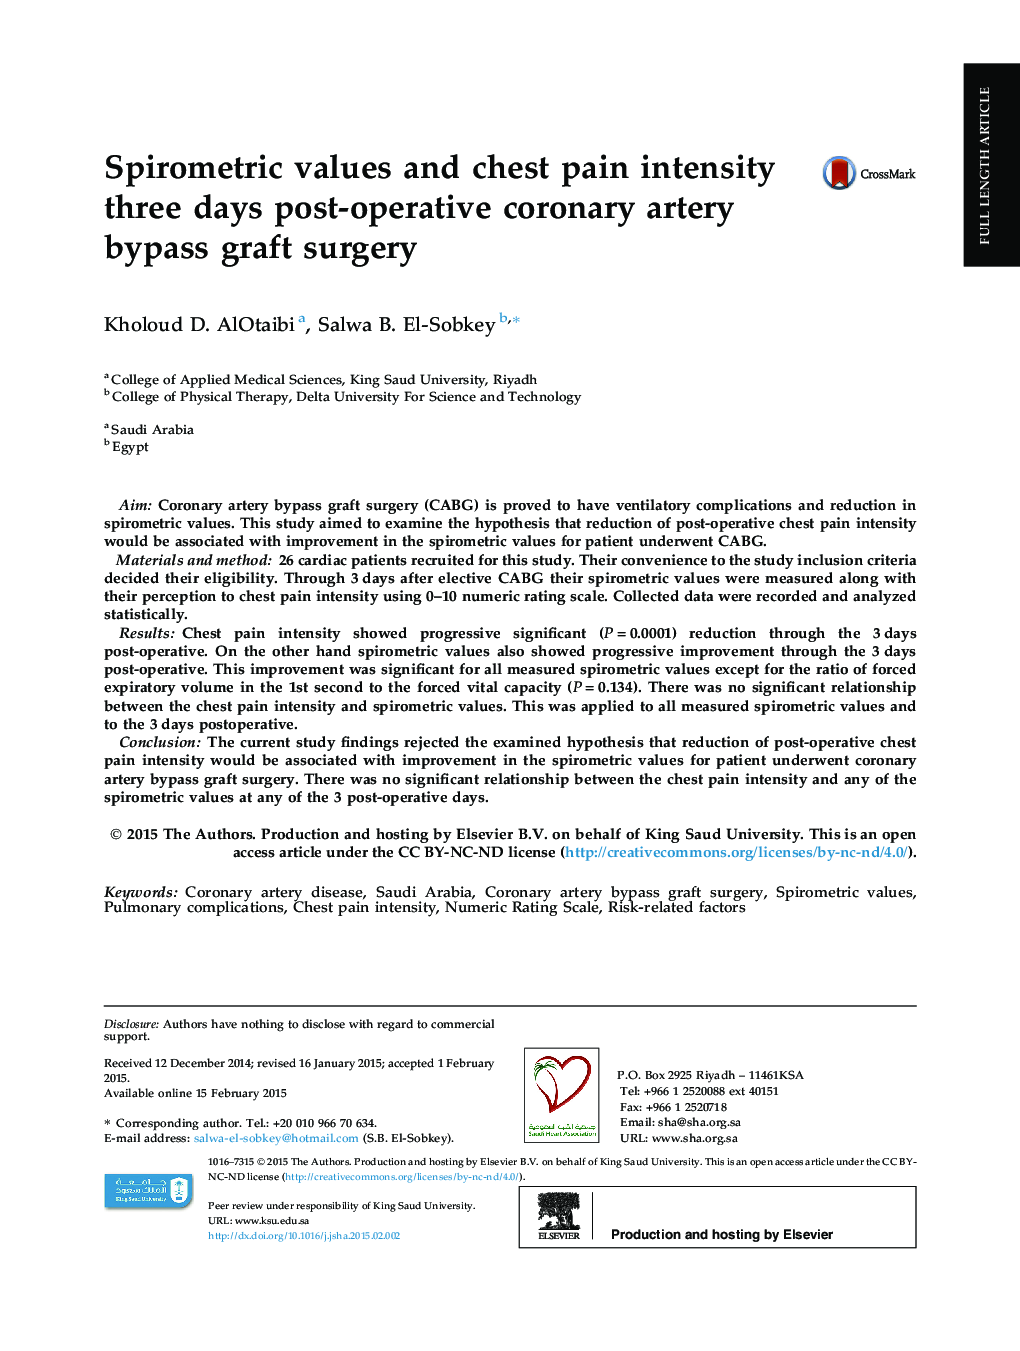 Spirometric values and chest pain intensity three days post-operative coronary artery bypass graft surgery 